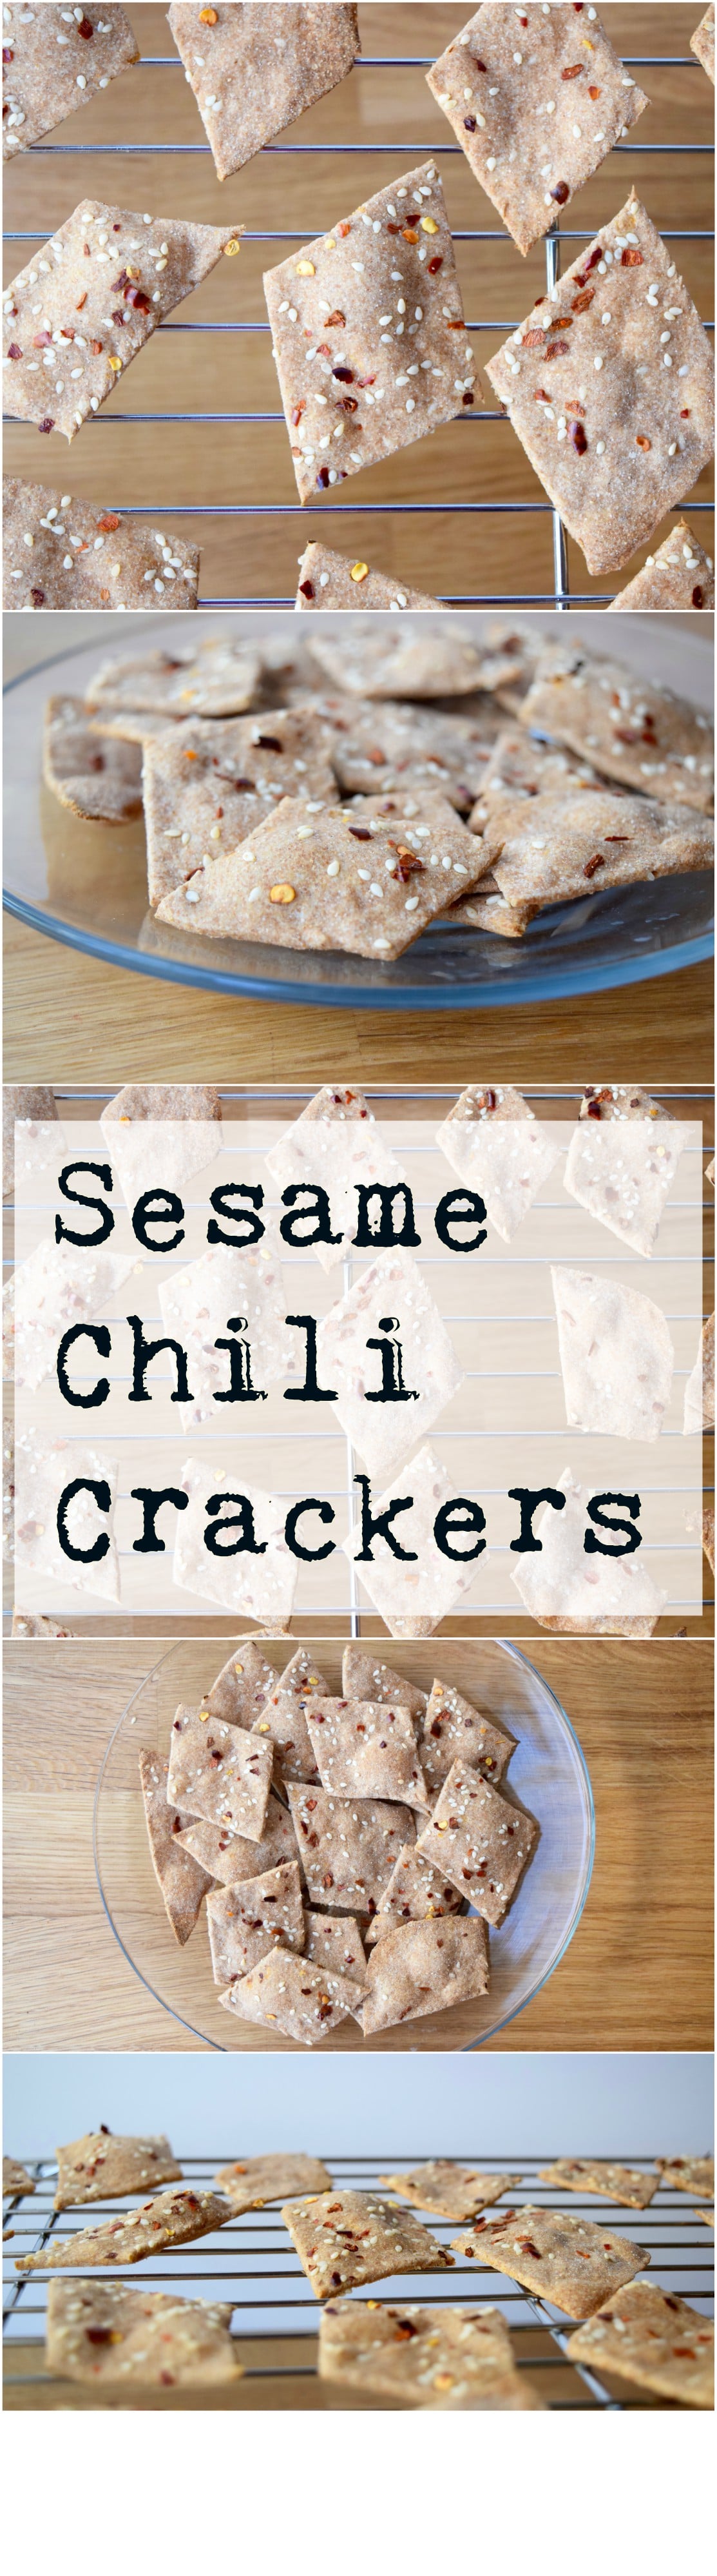 Sesame Chili Crackers